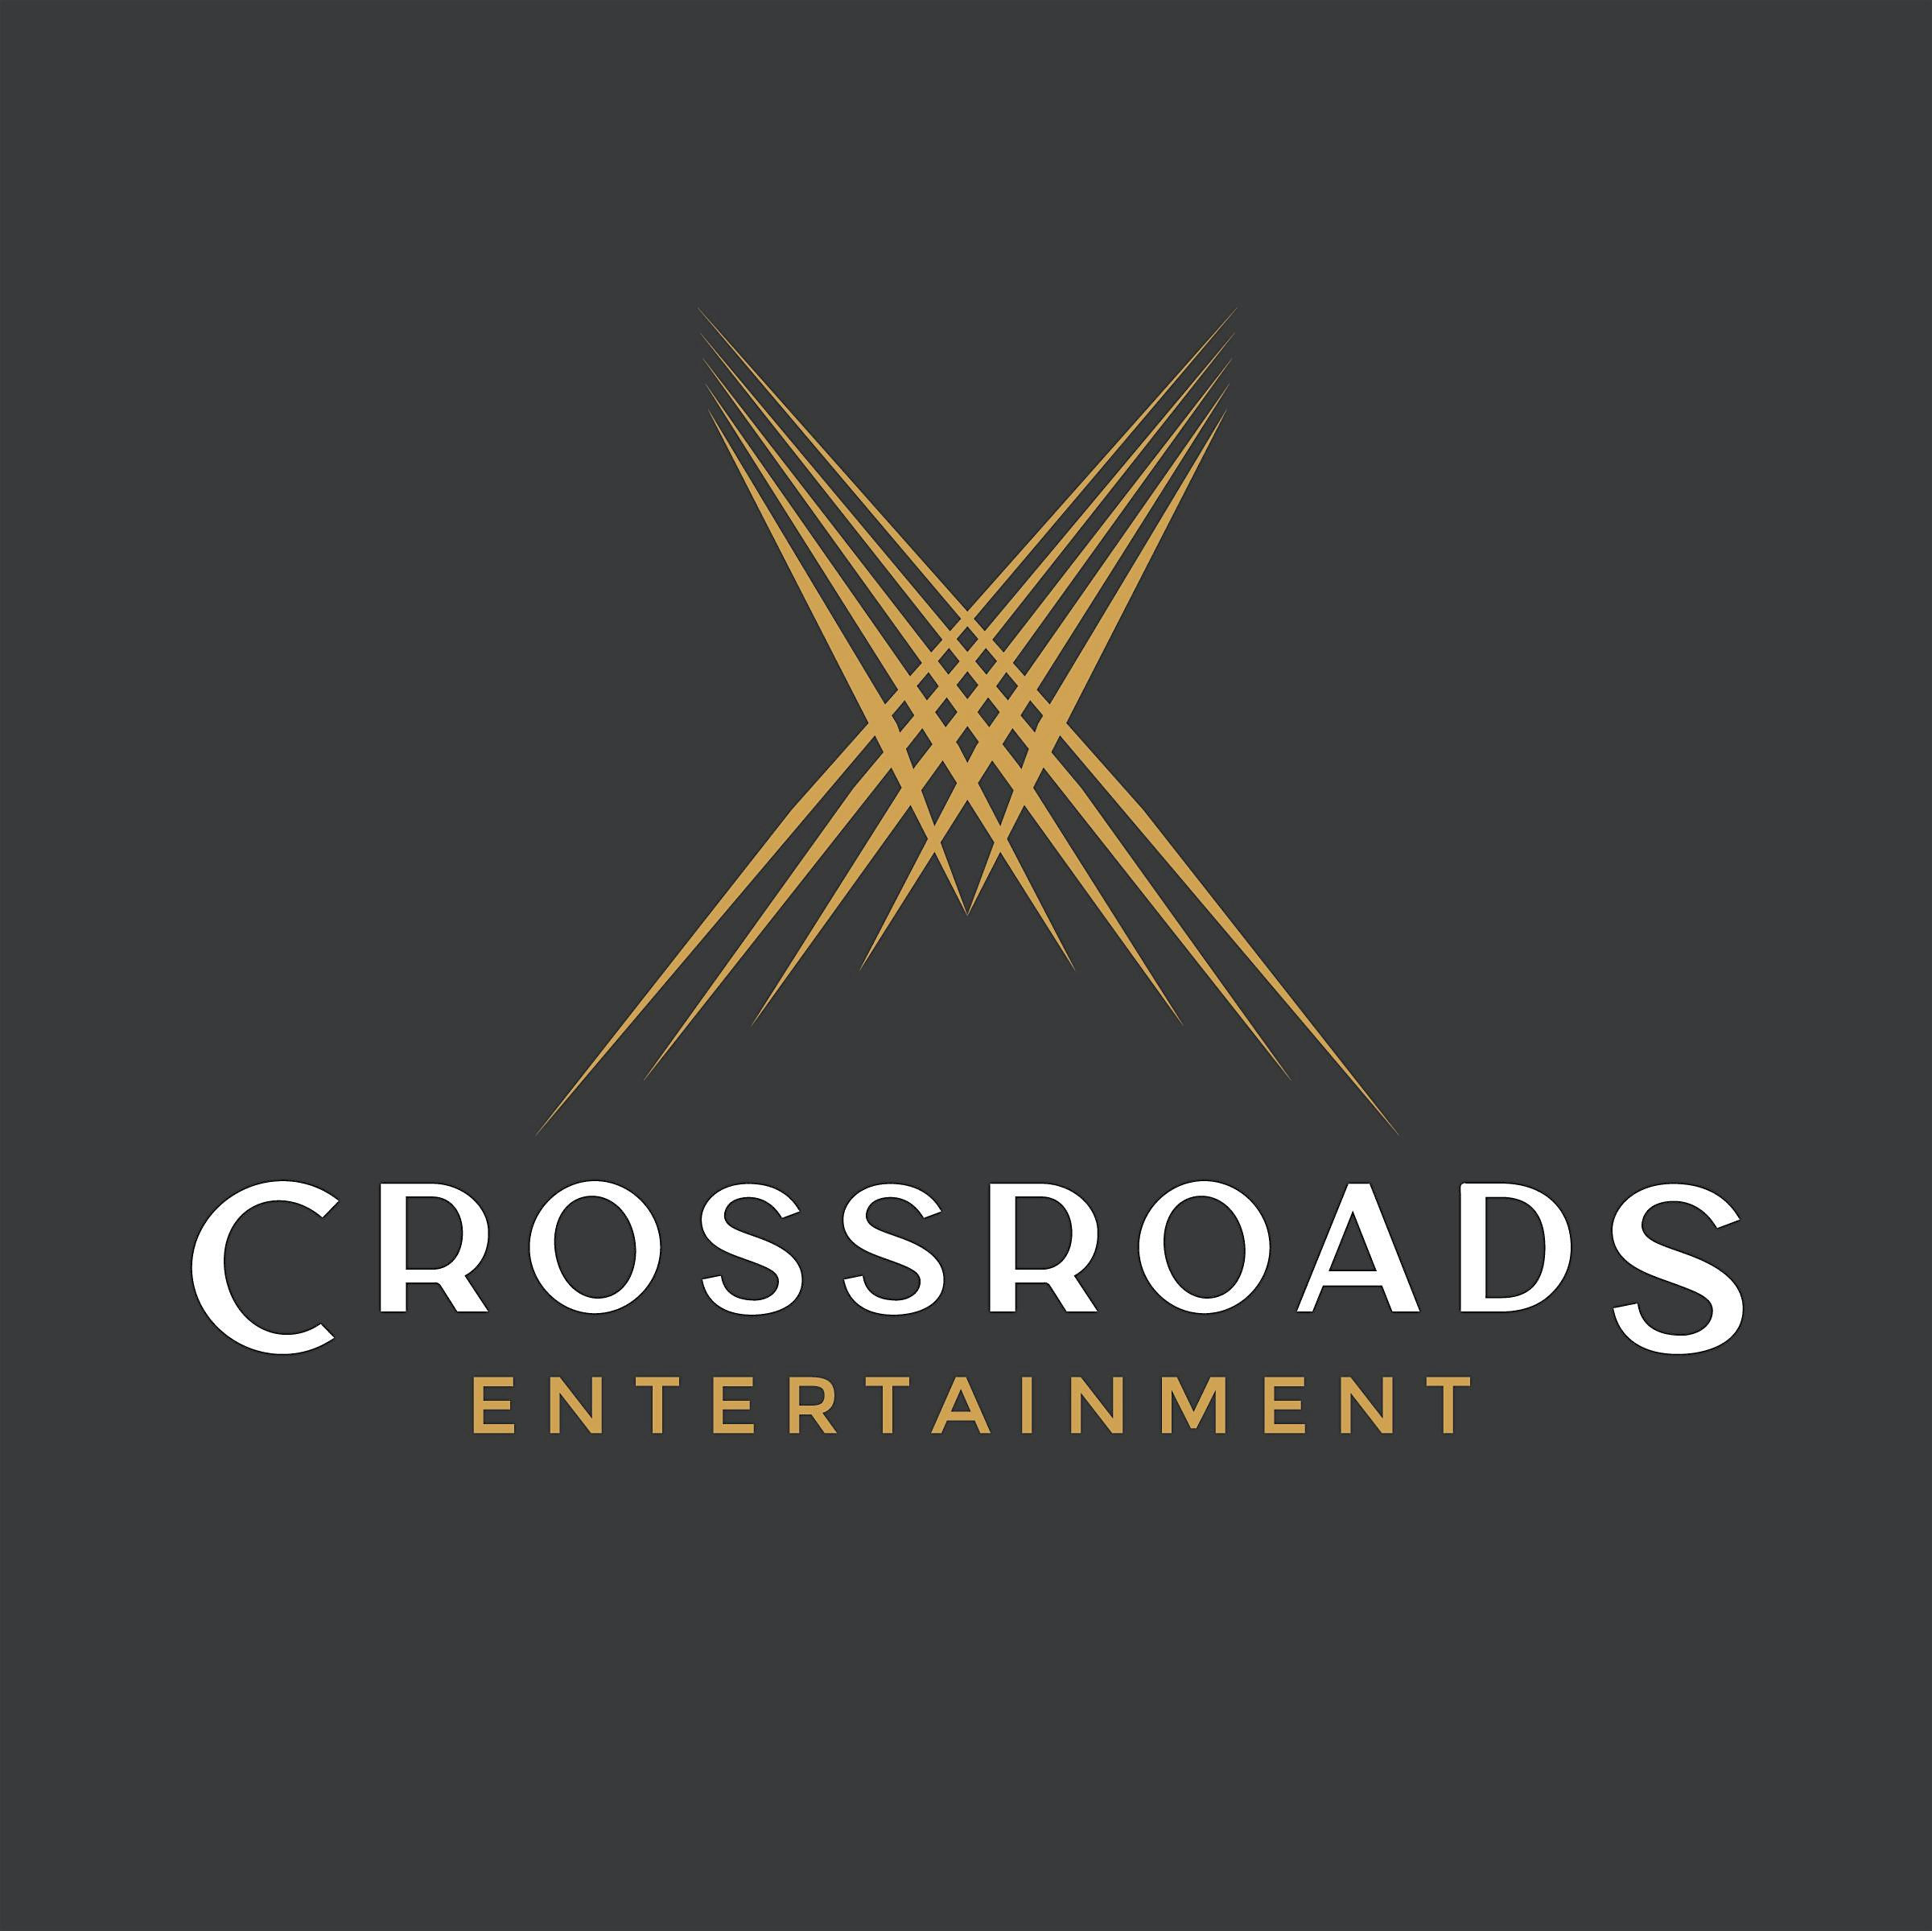 Crossroads Entertainment